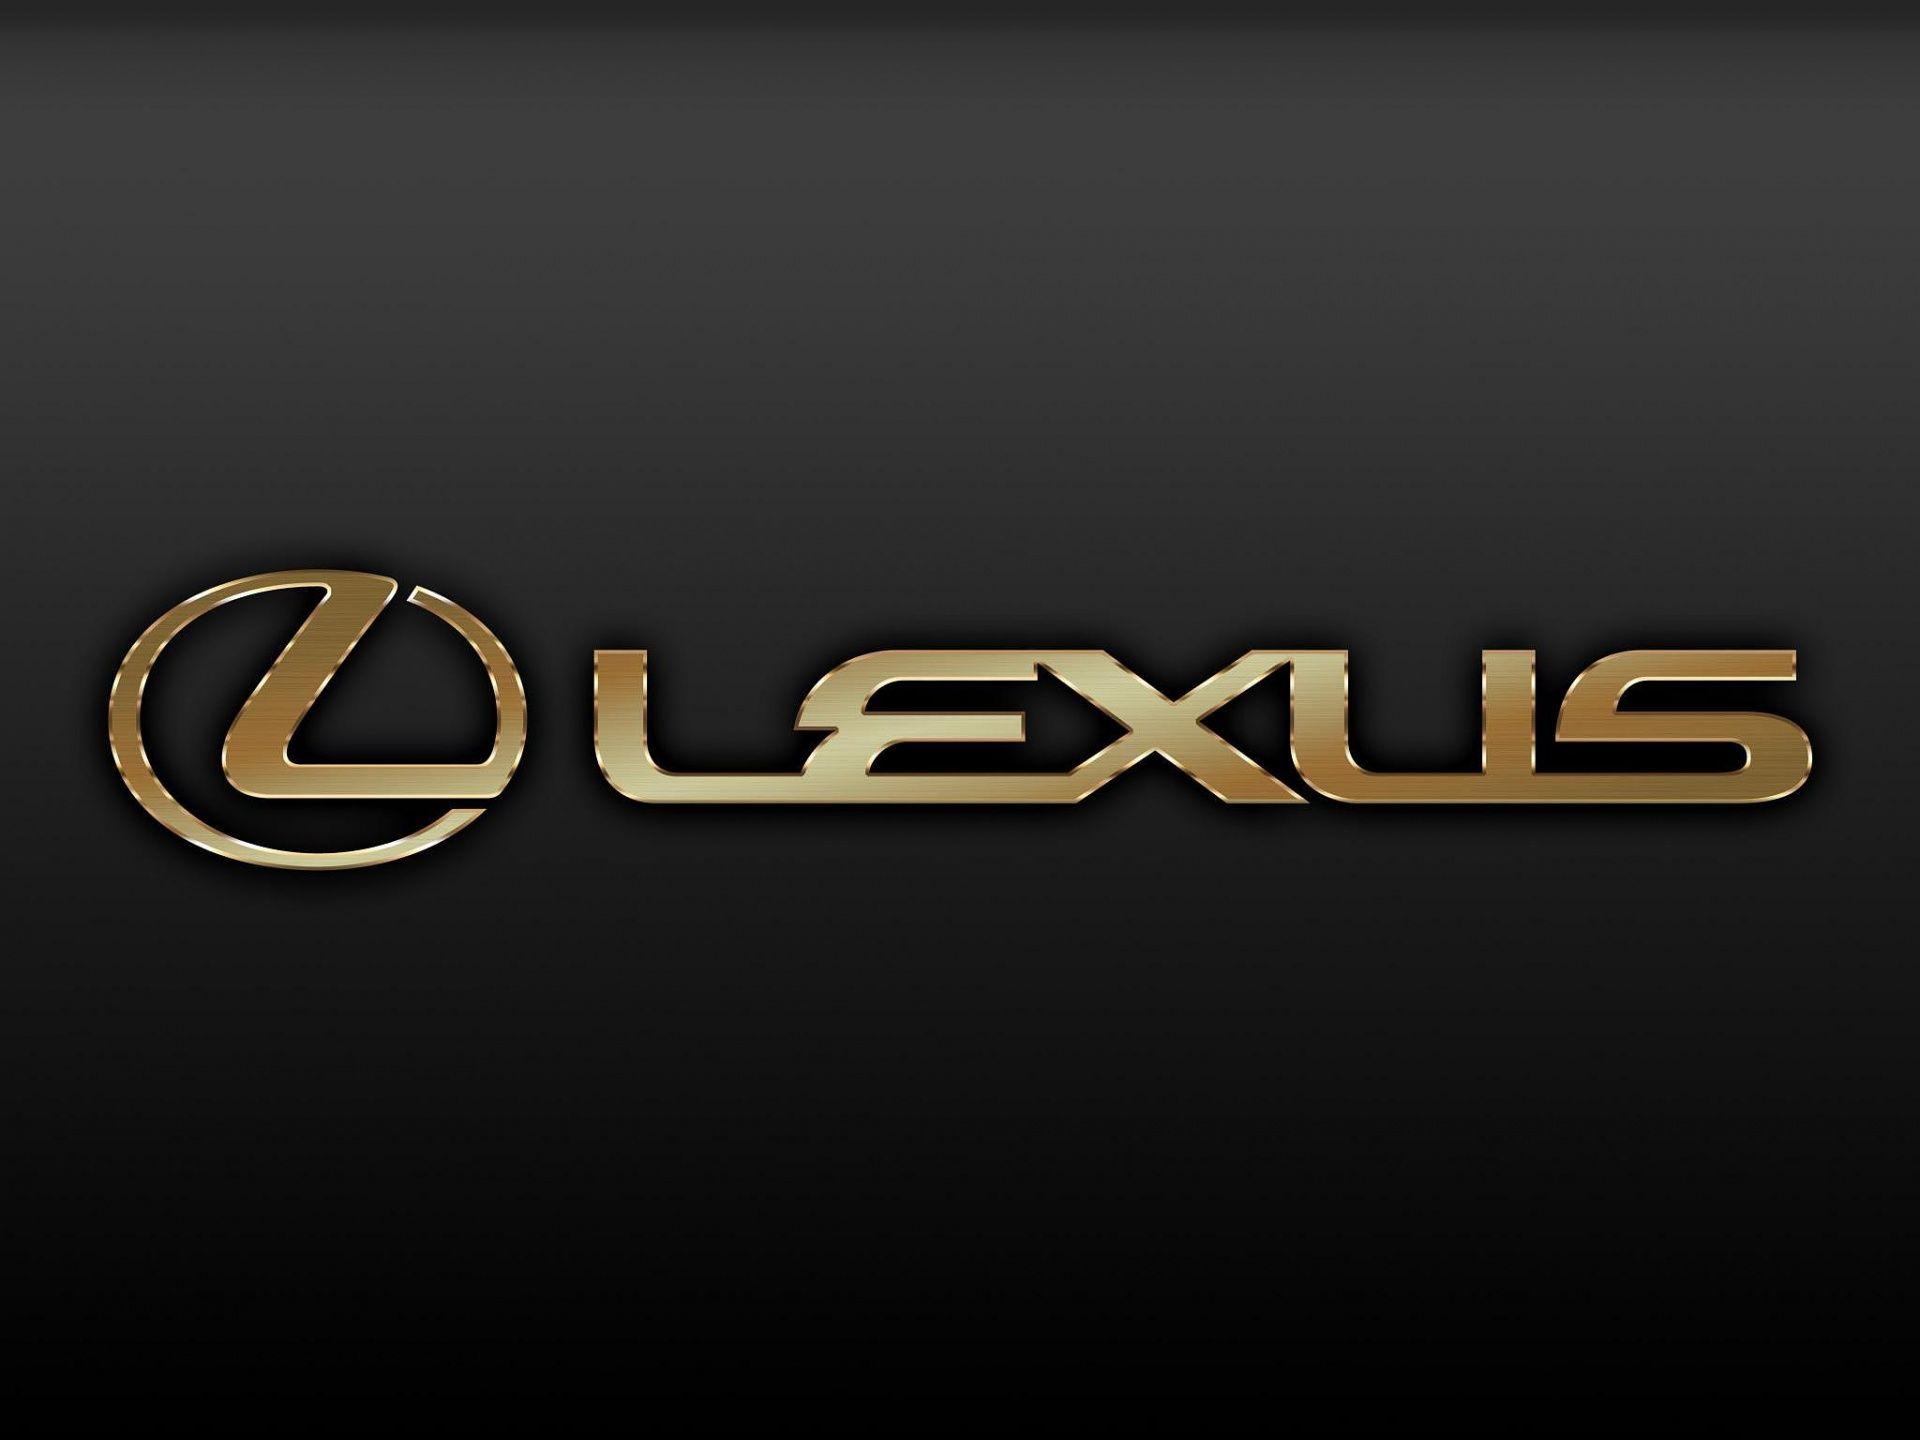 Gold Brand Logo - Lexus Logo, Lexus Car Symbol Meaning and History | Car Brand Names.com